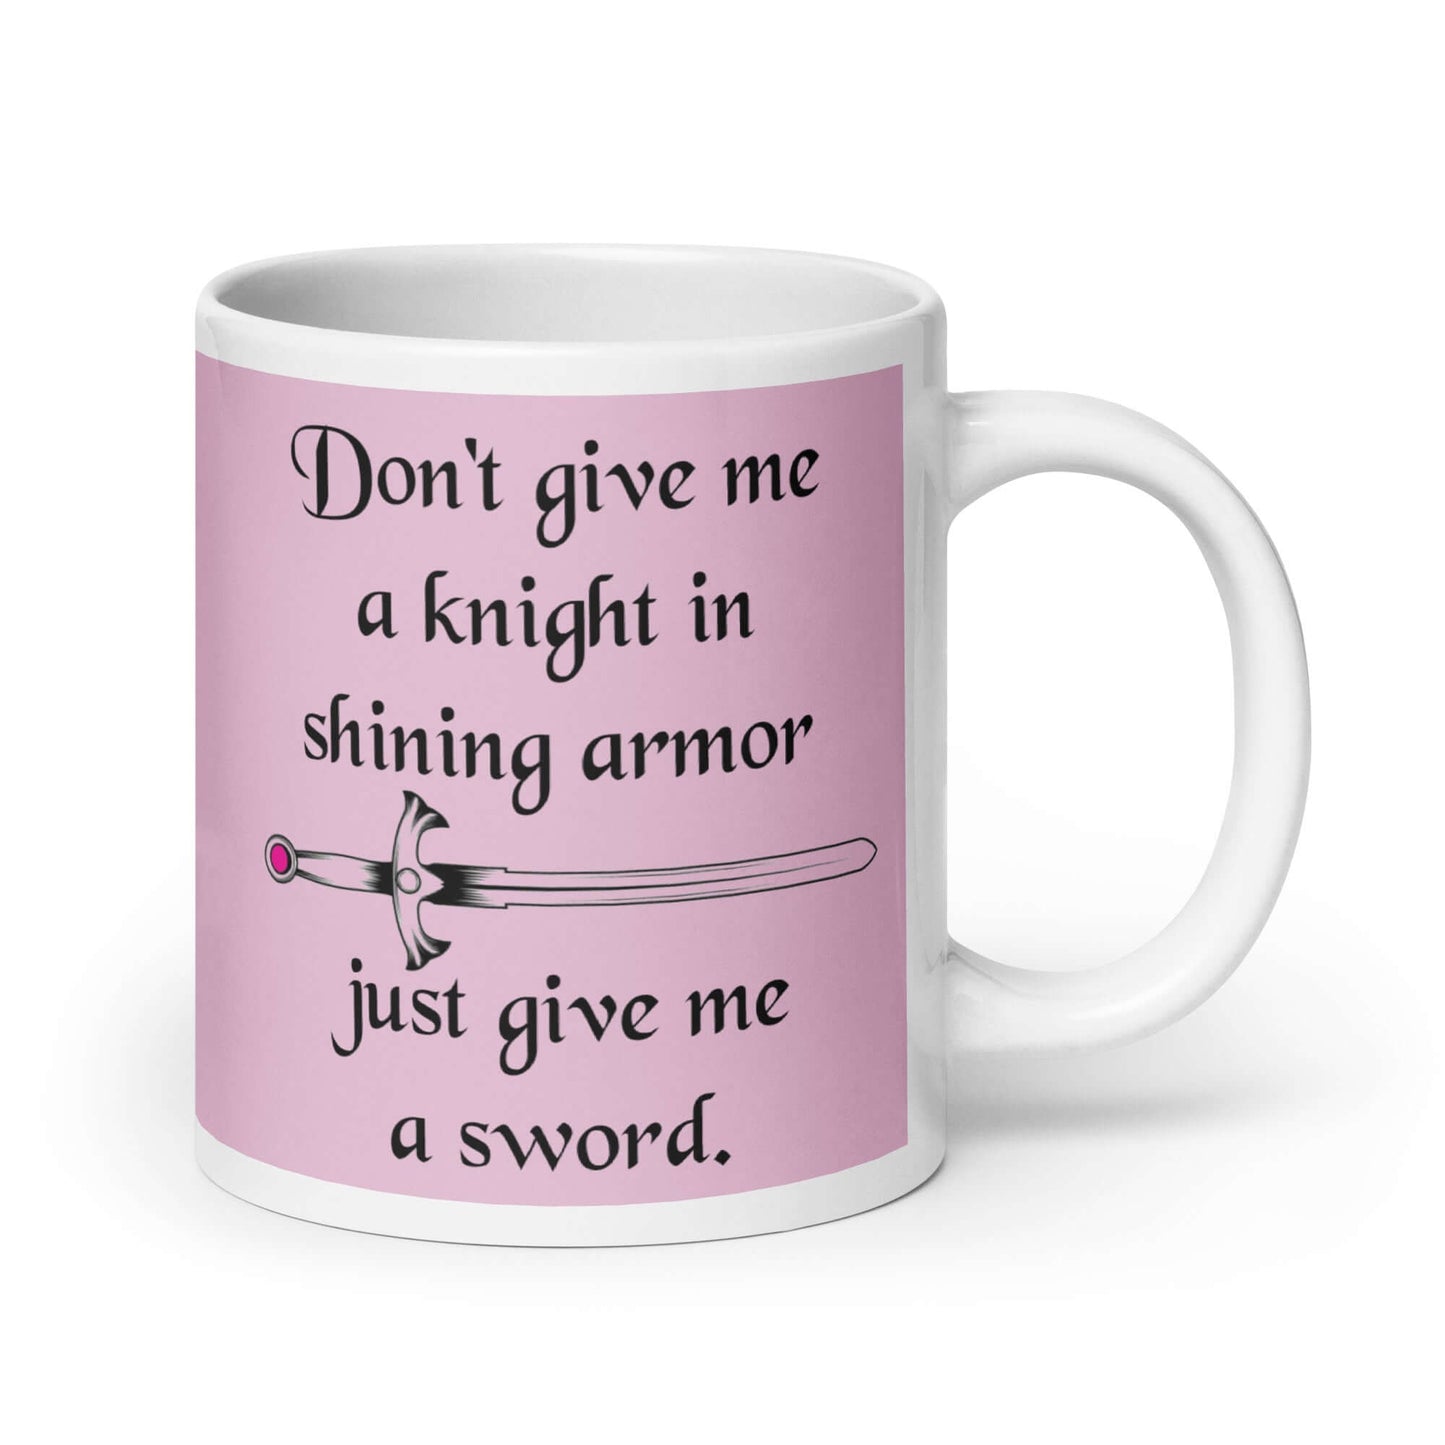 Just give me a sword girl power feminist mug